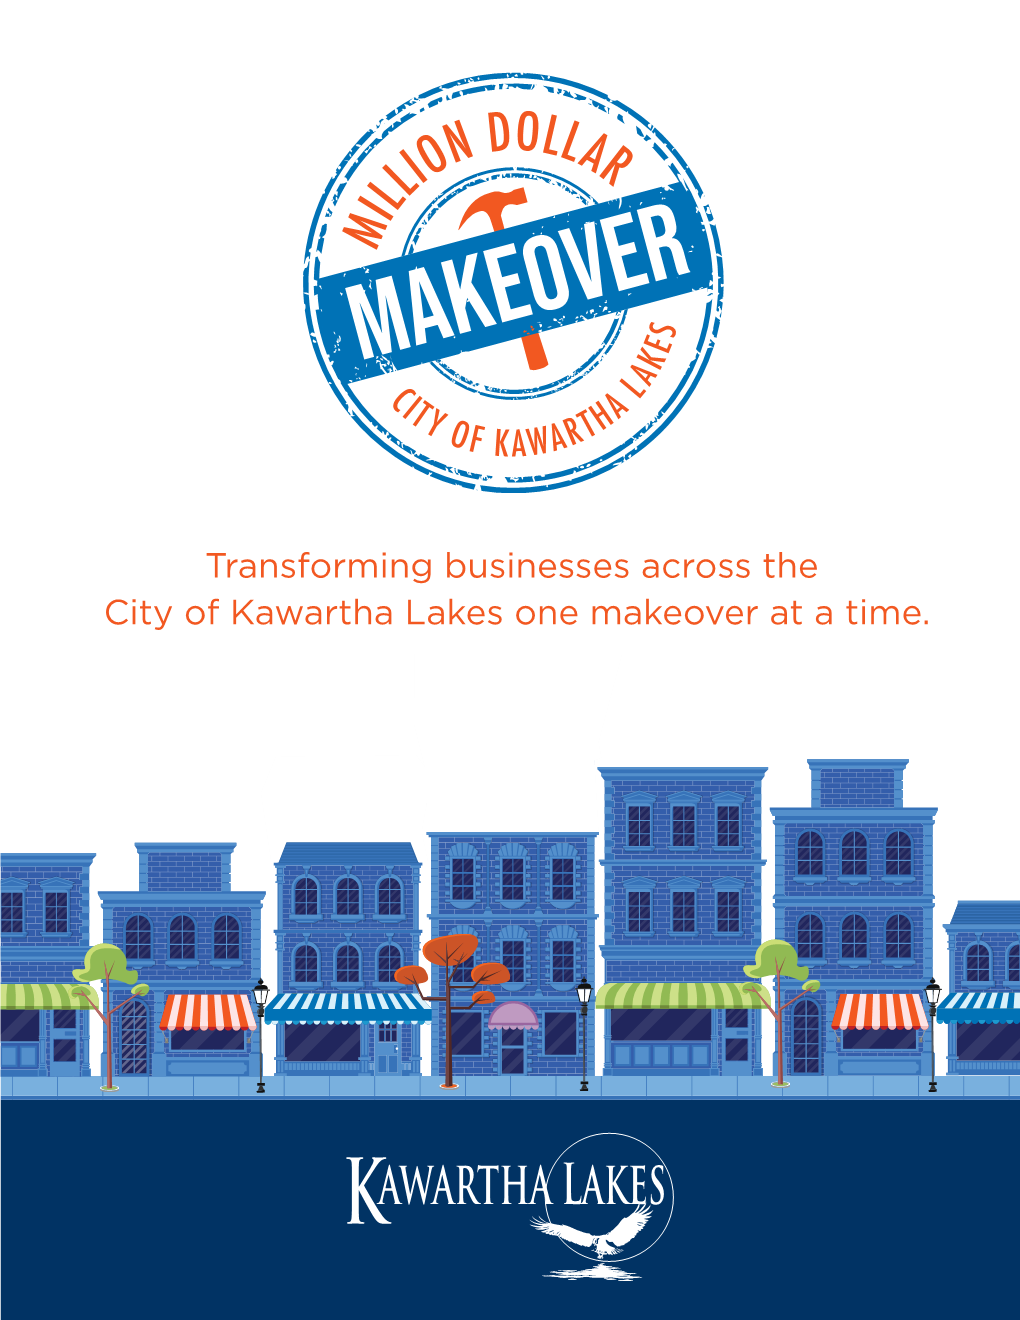 City of Kawartha Lakes Million Dollar Makeover